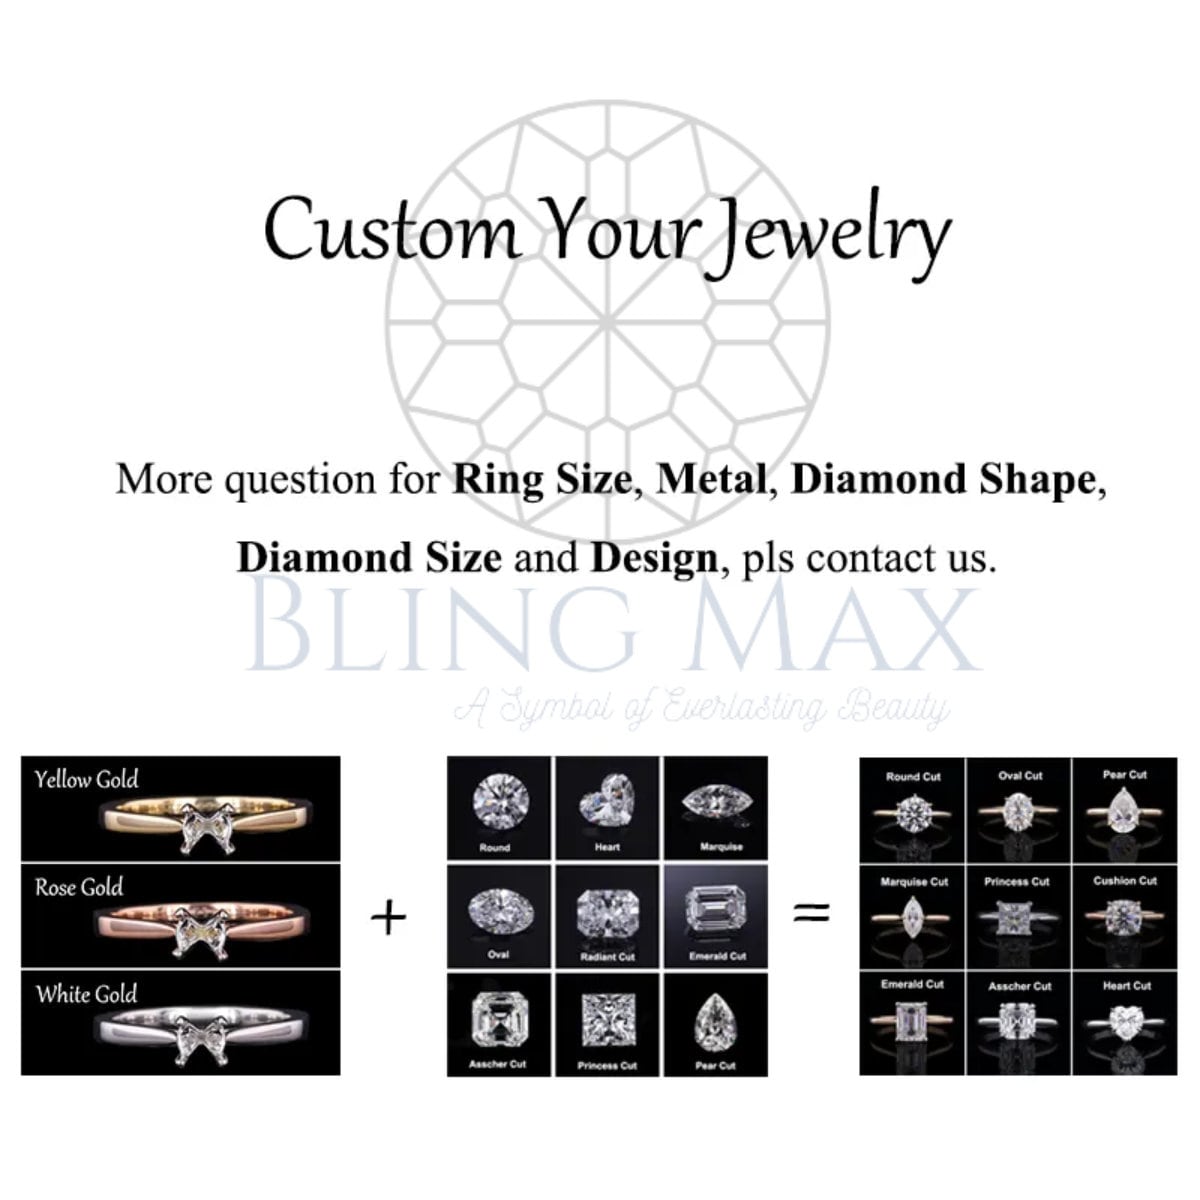 Vivid Green Lab-Grown Radiant Diamond Engagement Ring